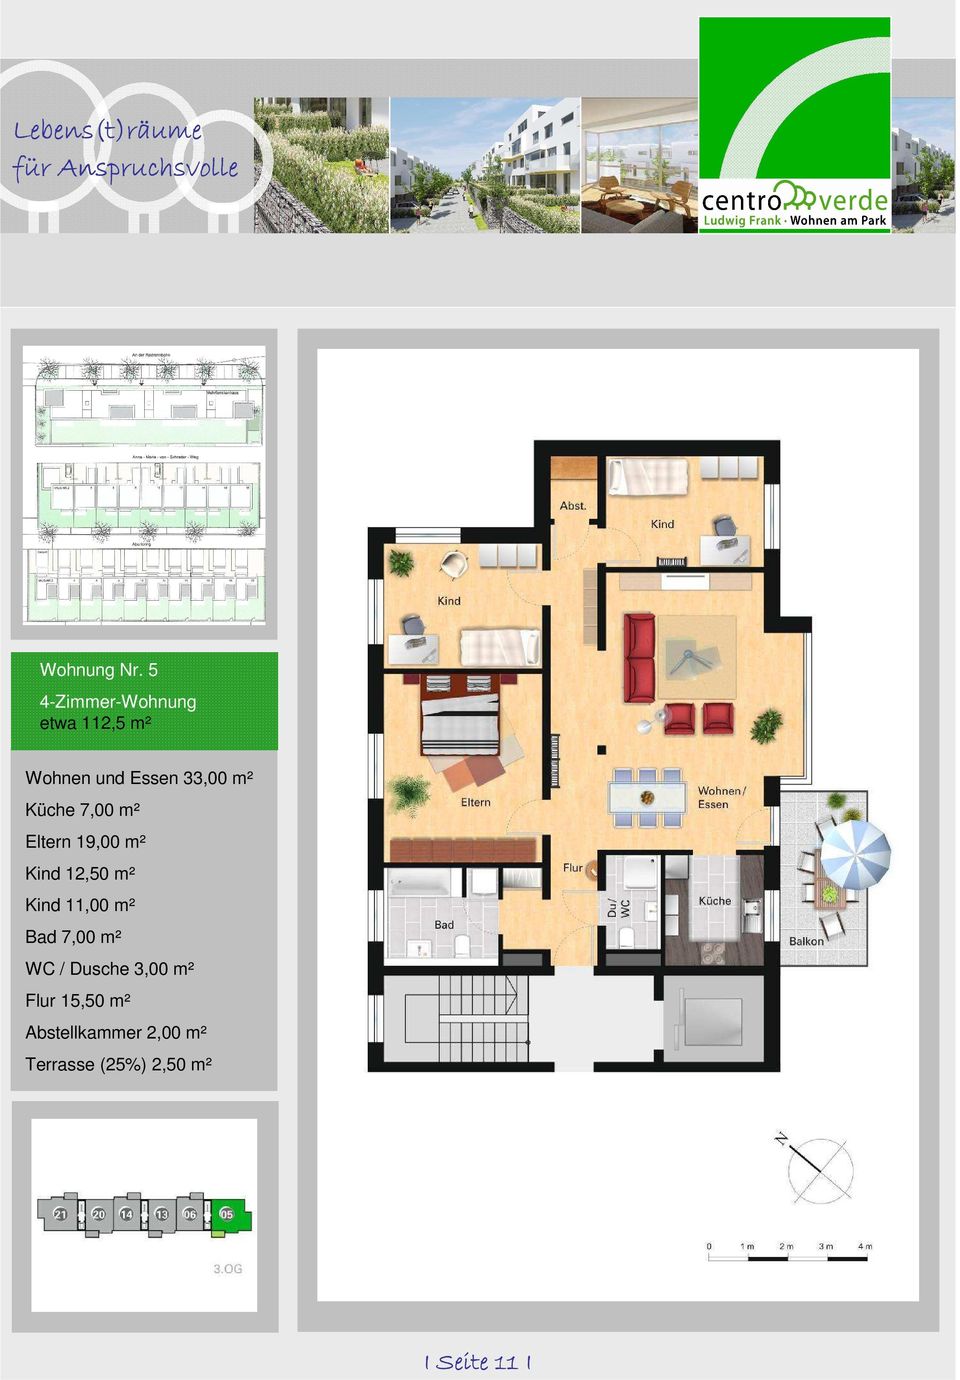 Küche 7,00 m² Eltern 19,00 m² Kind 12,50 m² Kind 11,00 m²